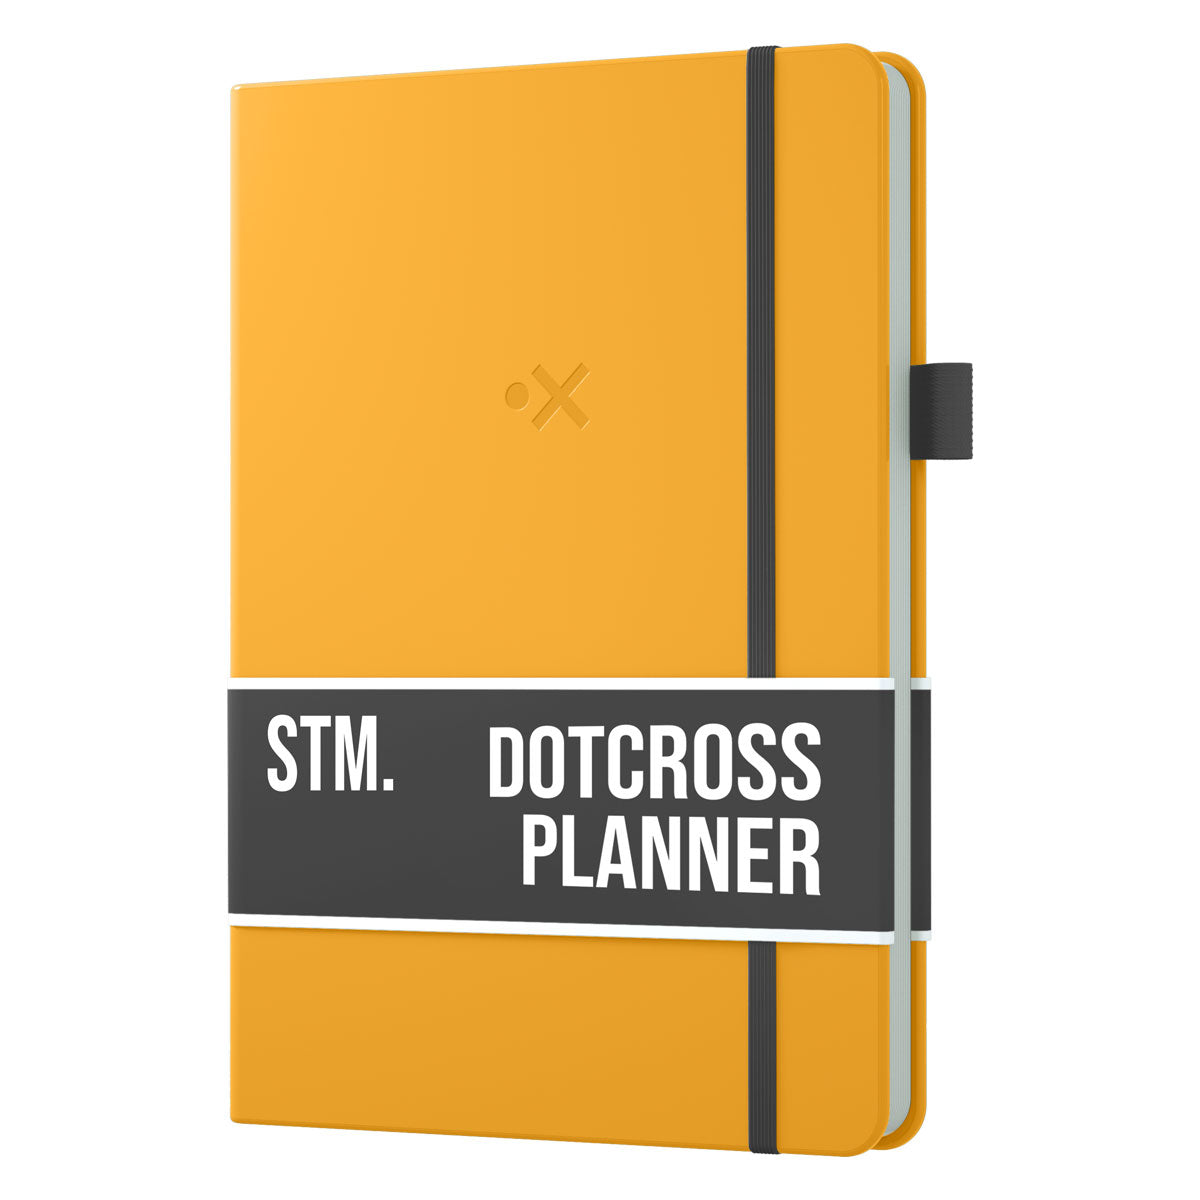 DotCross Planner - Undated